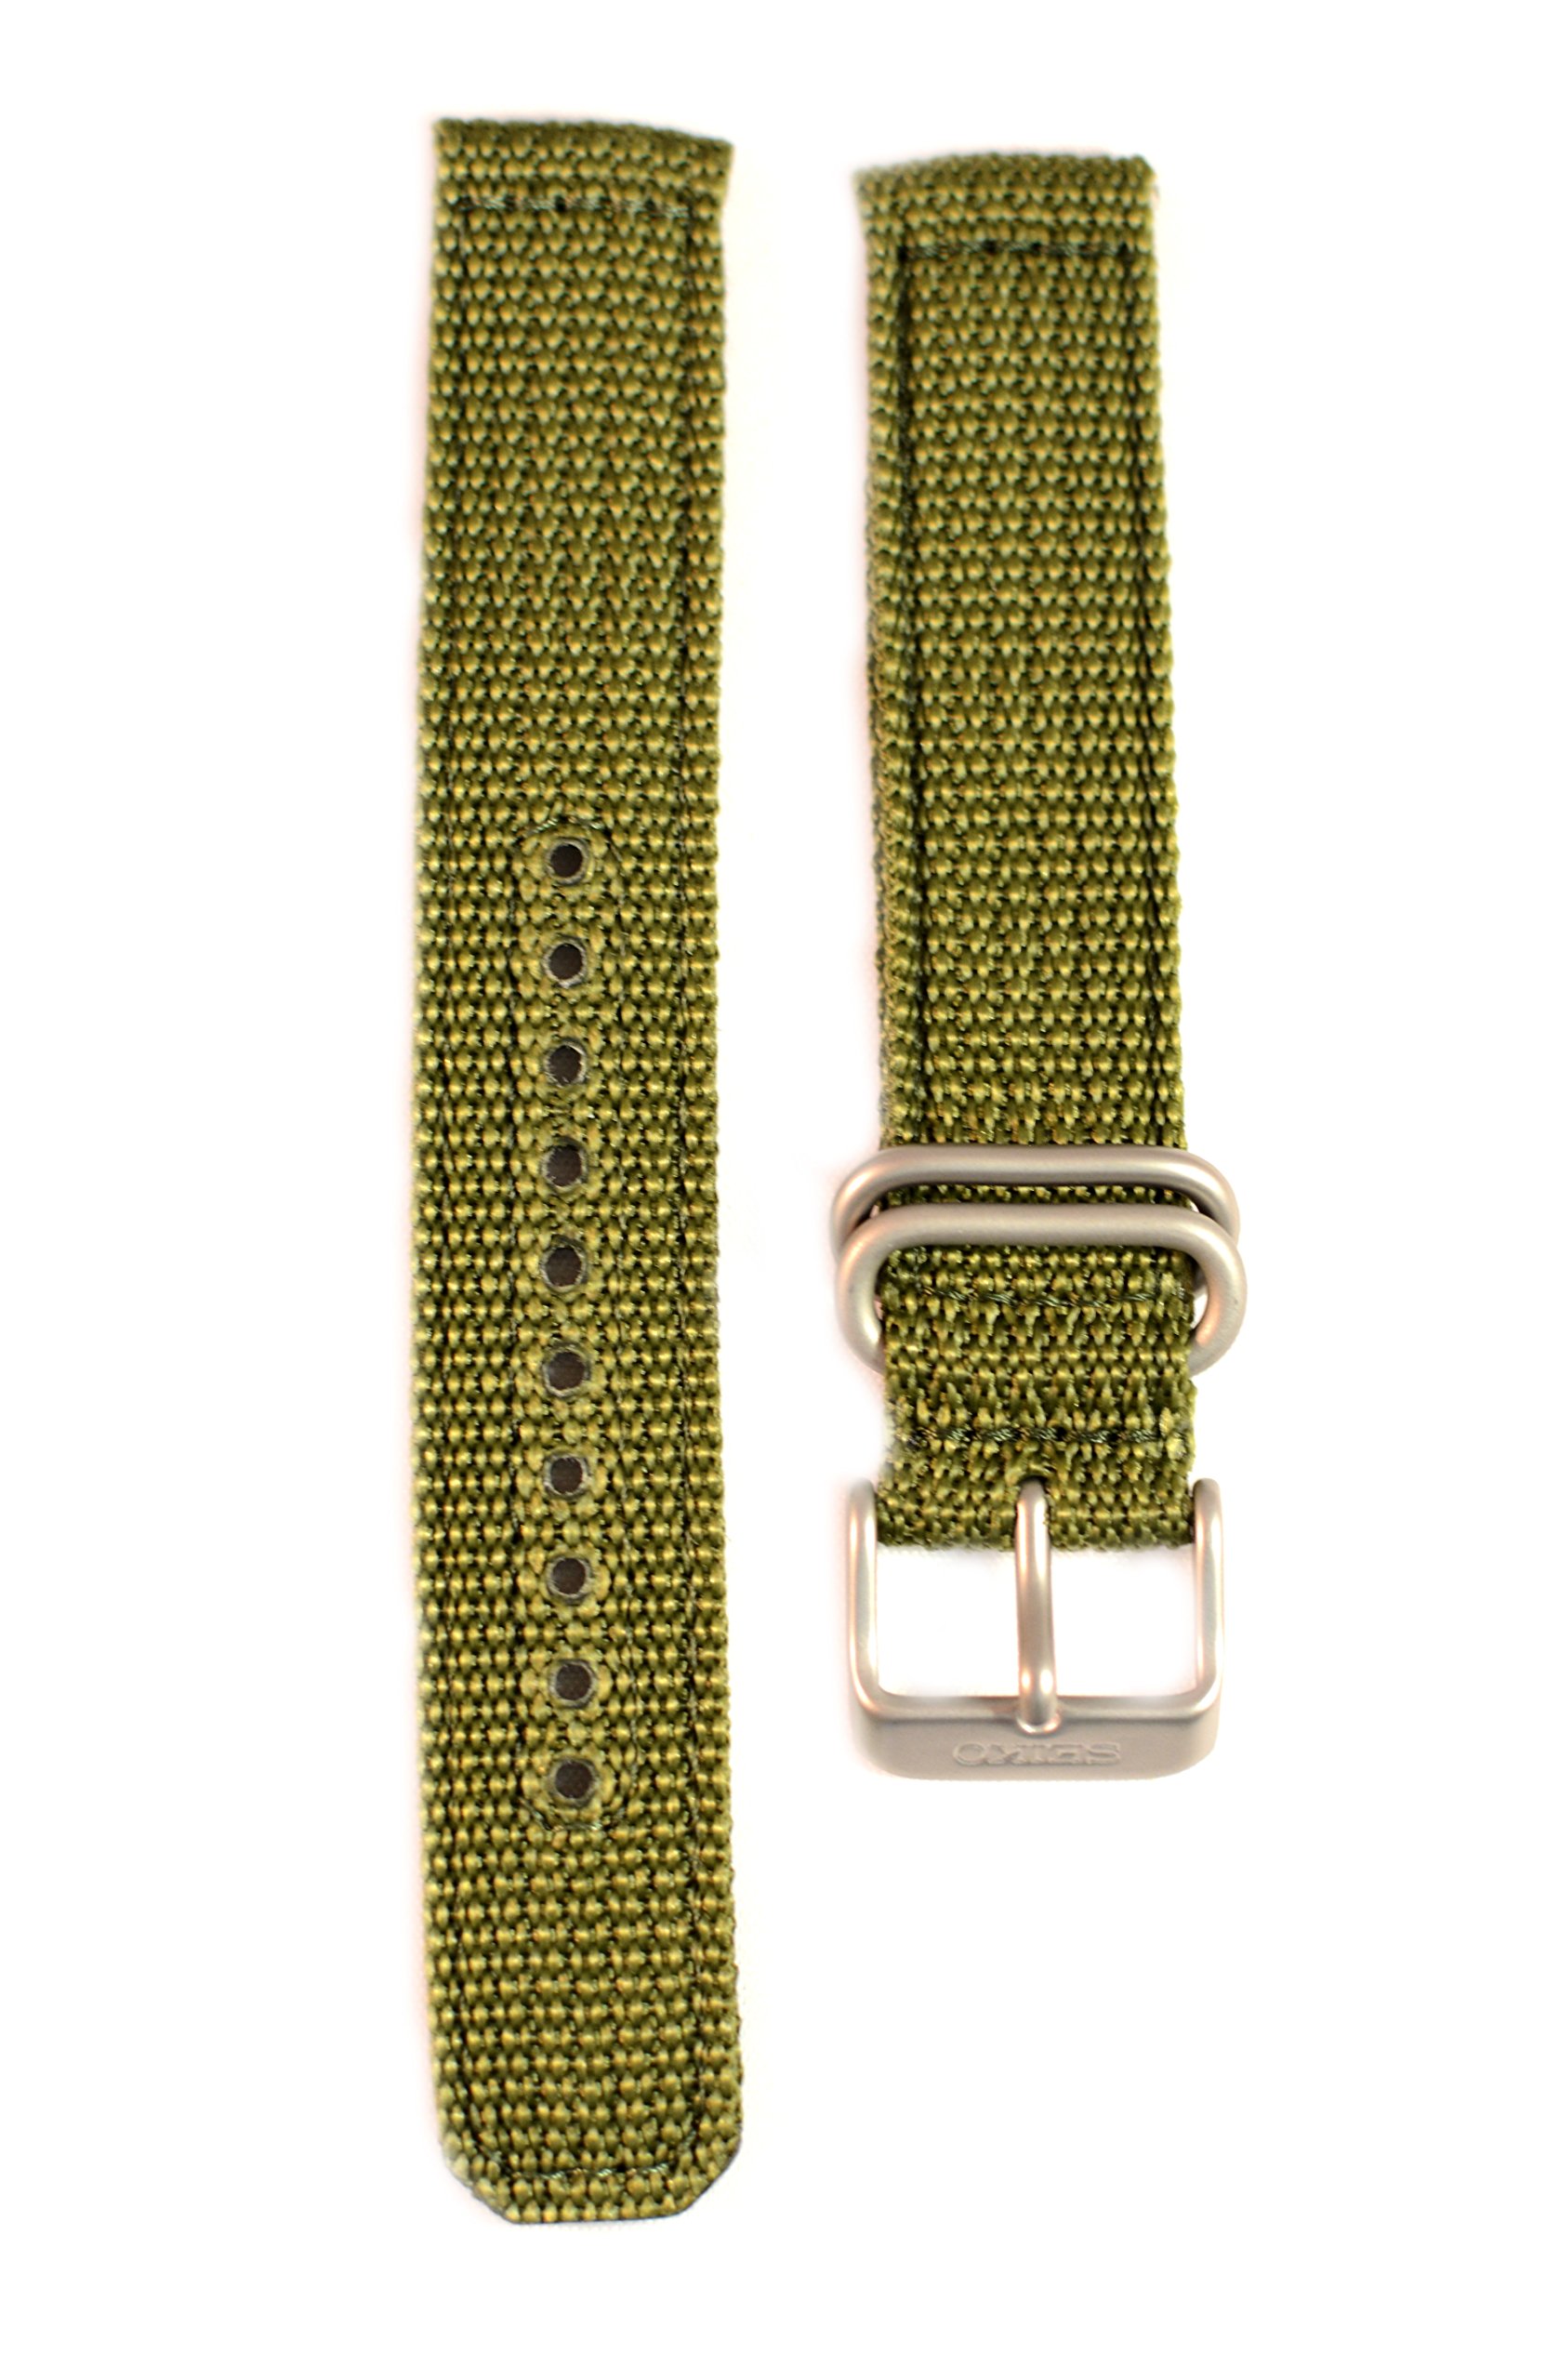 Seiko Military Automatic Olive Green Nylon 18mm Watch Strap